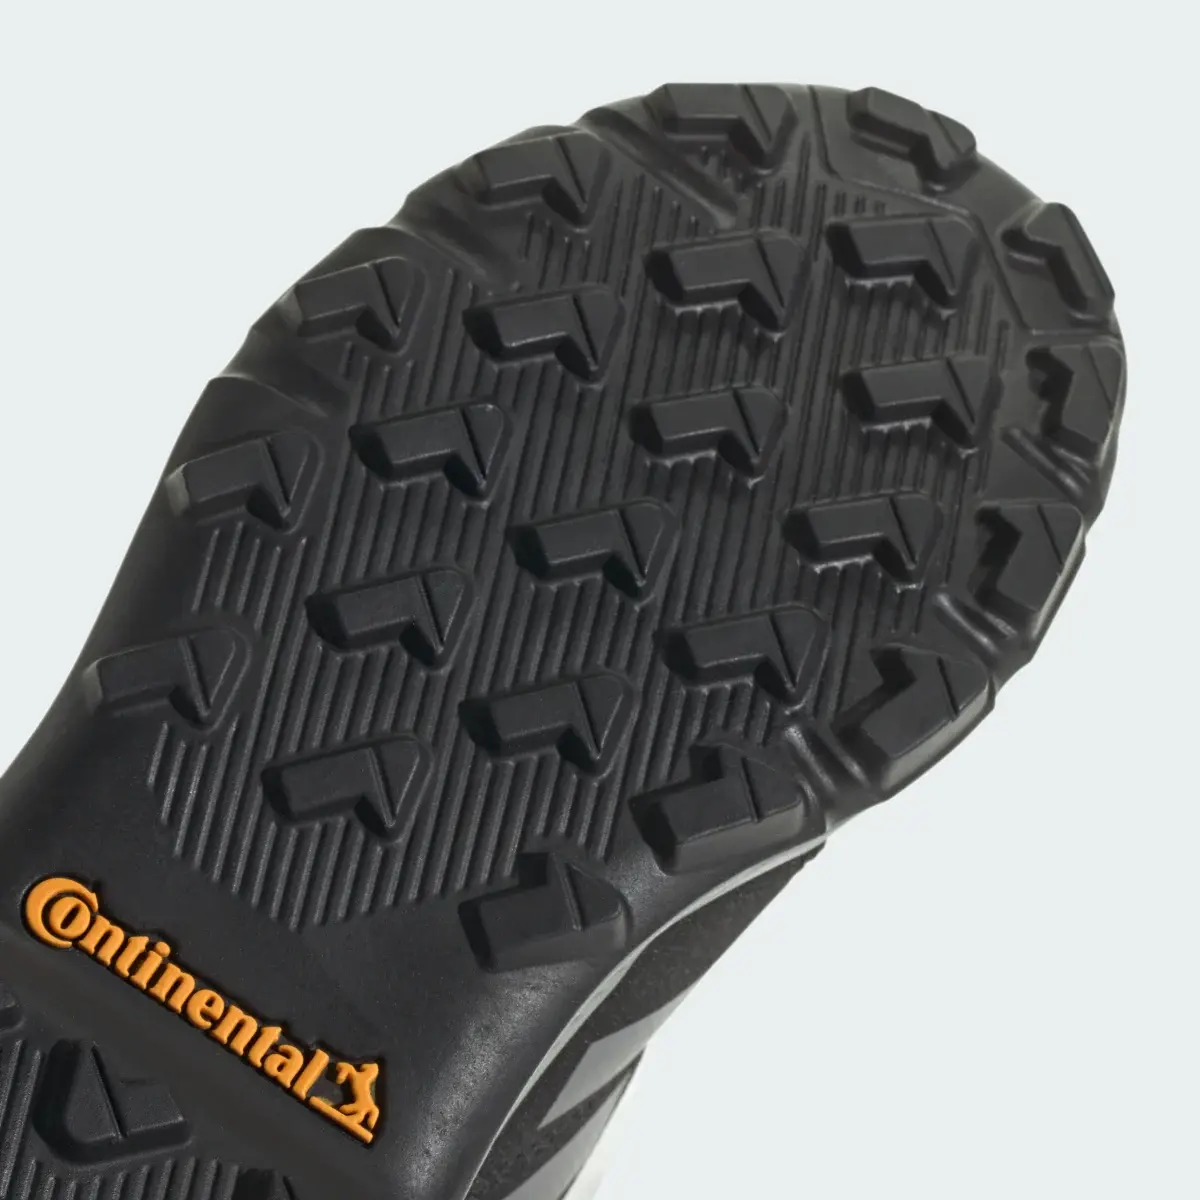 Adidas Chaussure de randonnée Organizer Mid GORE-TEX. 3